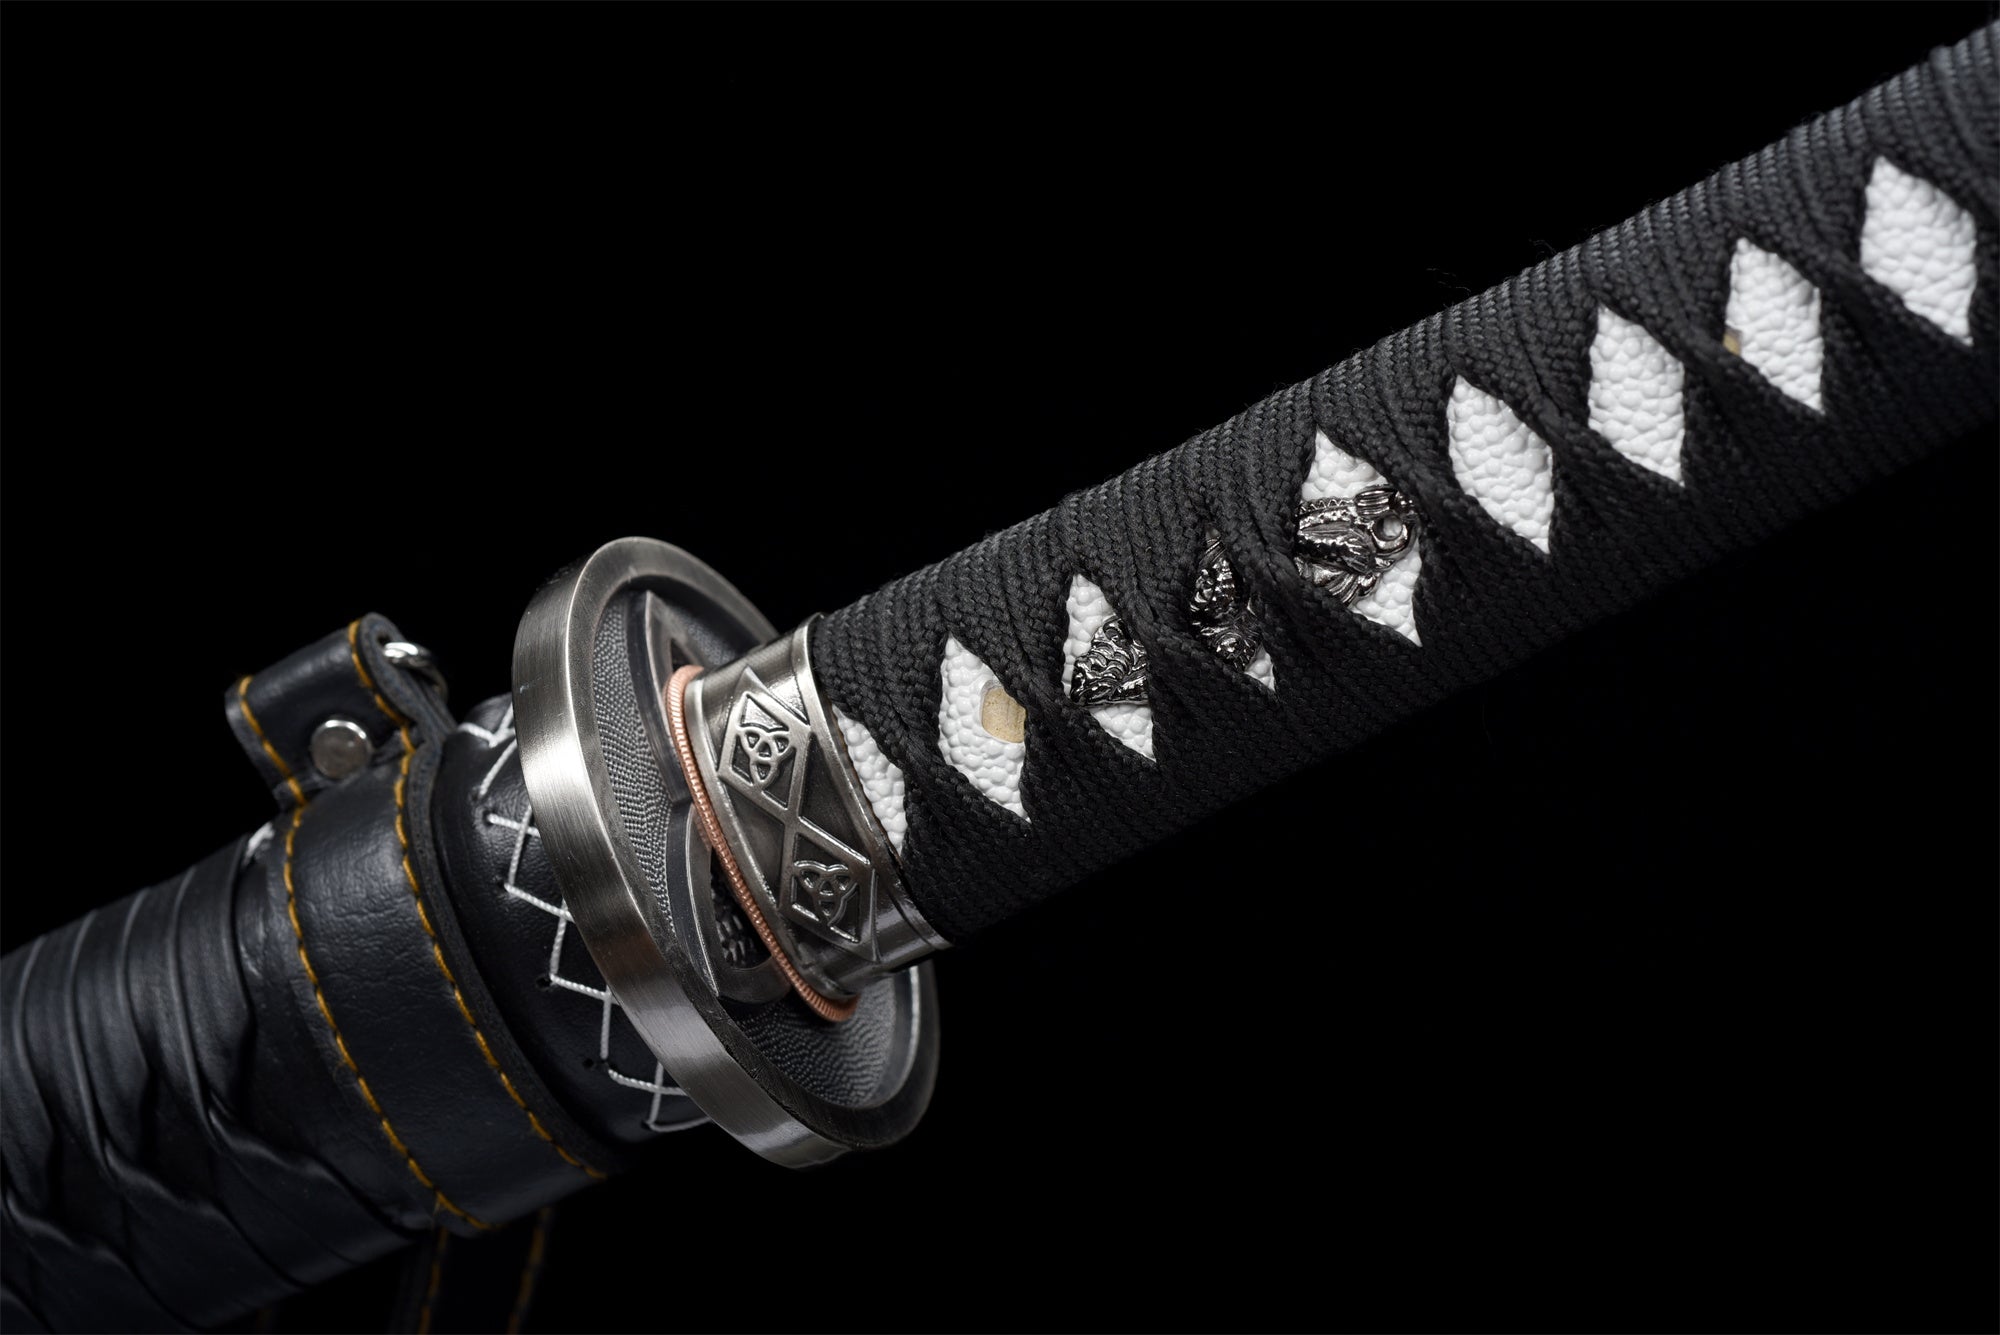 The Walking Dead: Michonne Katana, japanisches Katana, echtes handgefertigtes Samurai-Schwert, Stahl mit hohem Mangangehalt